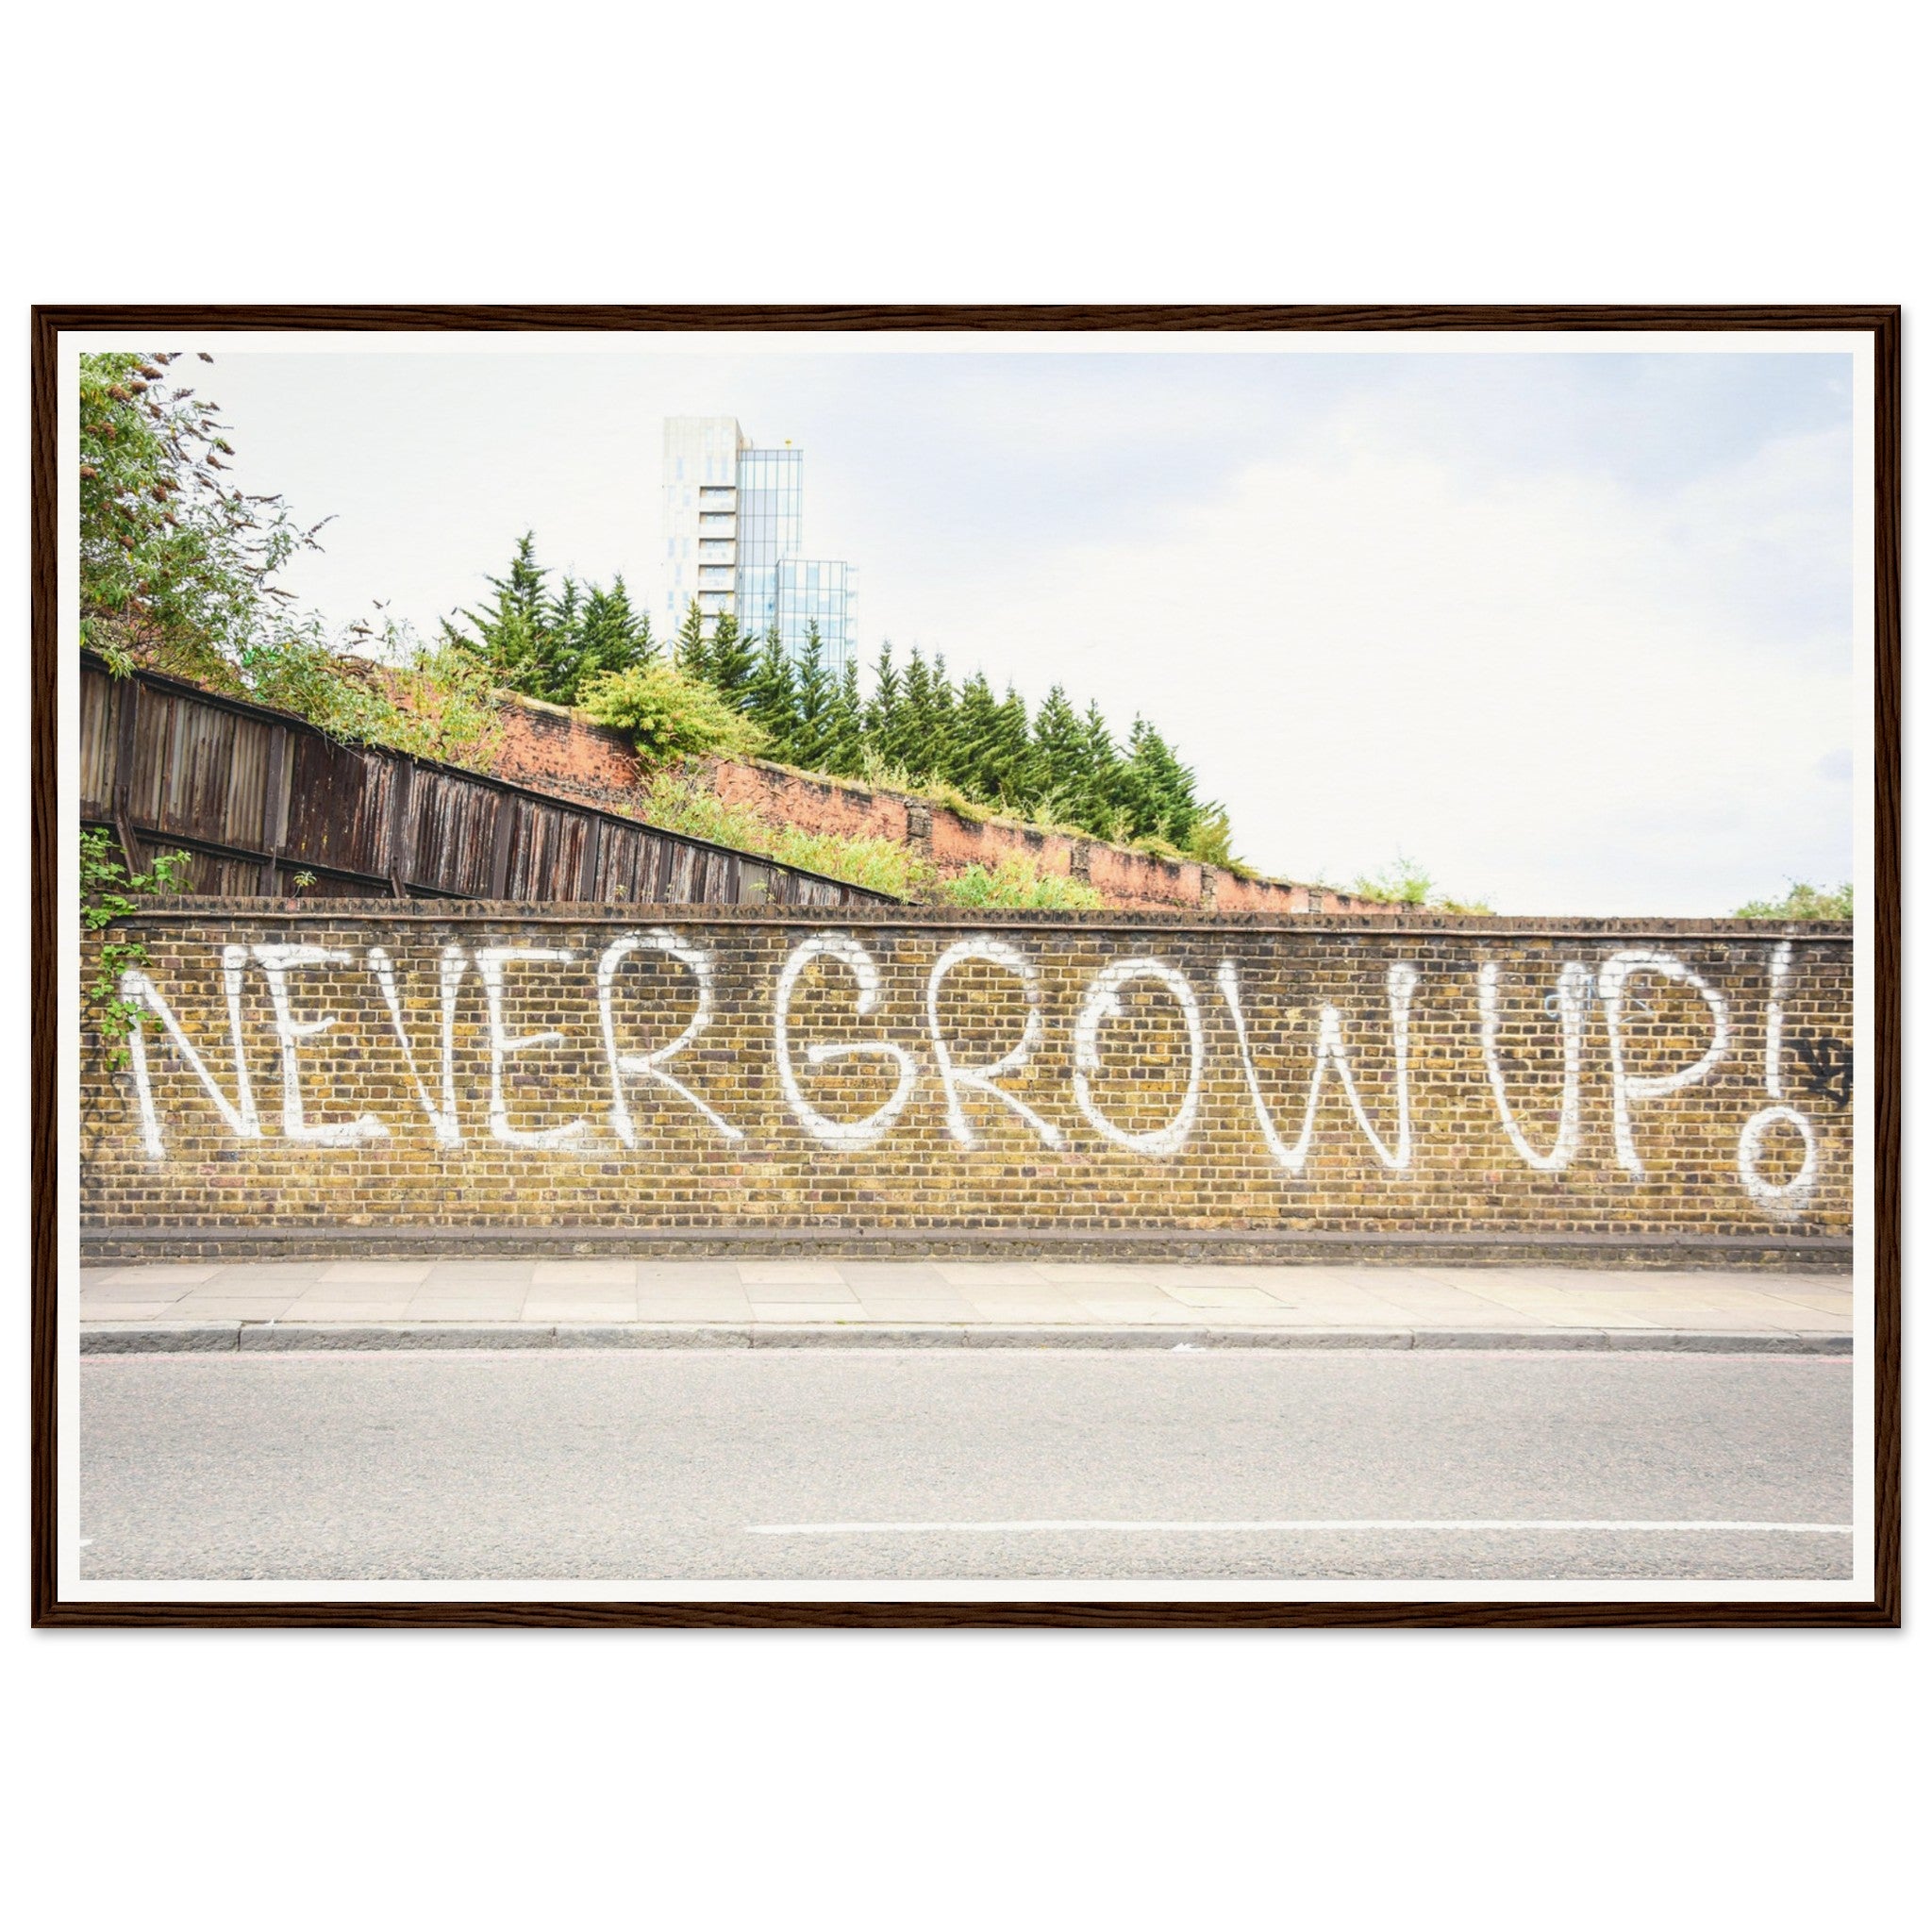 "Never Grow Up" Wooden Framed Poster